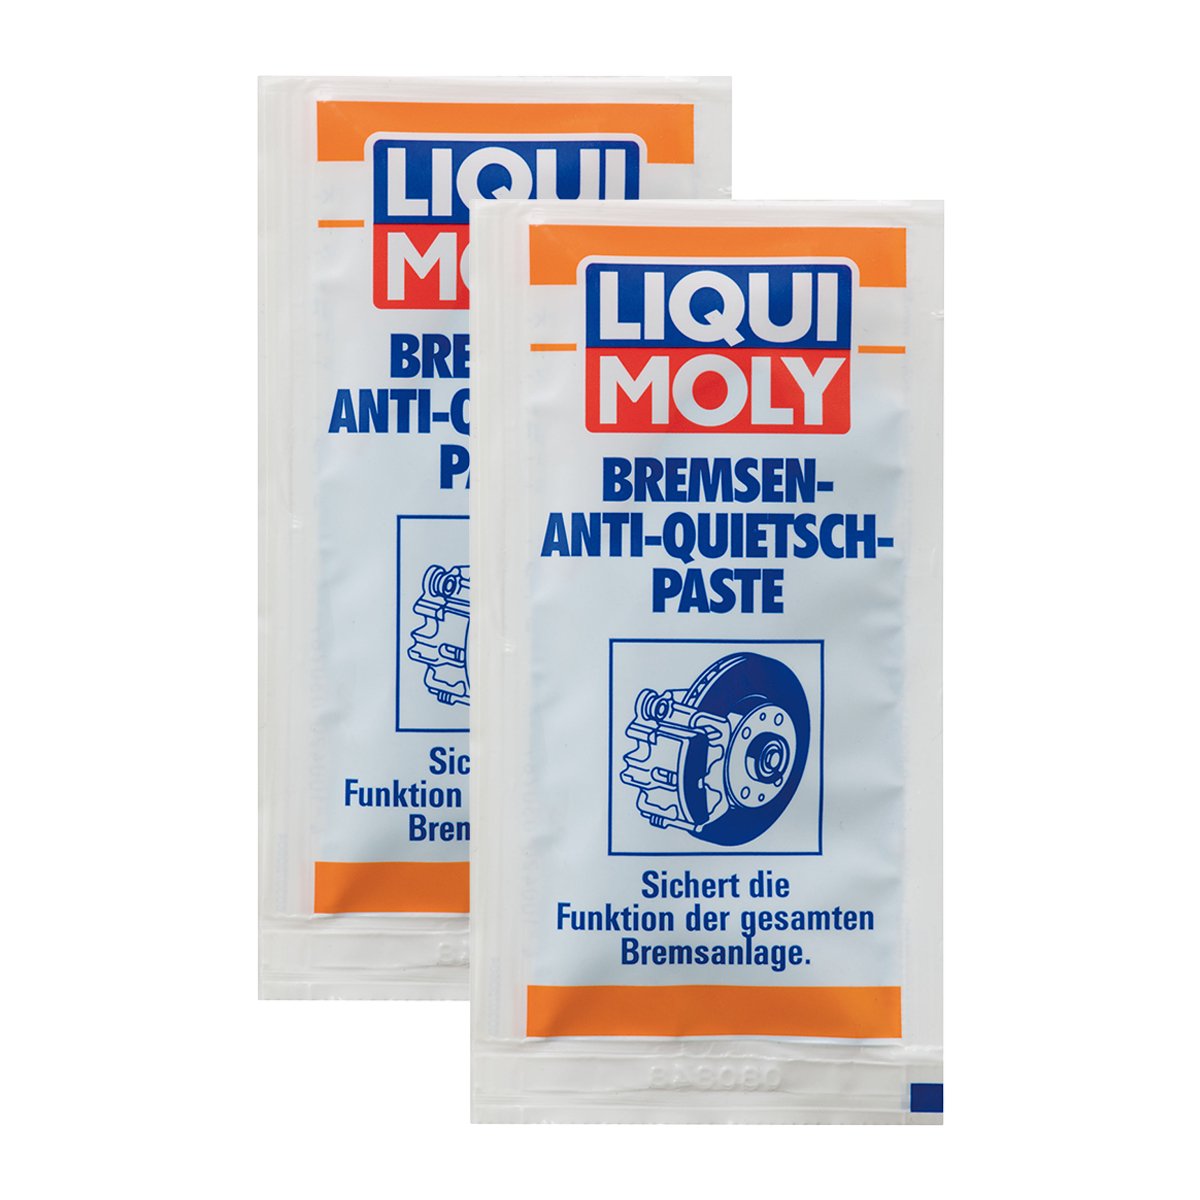 Liqui Moly 2X 3078 Bremsen-Anti-Quietsch-Paste 10g von Liqui Moly